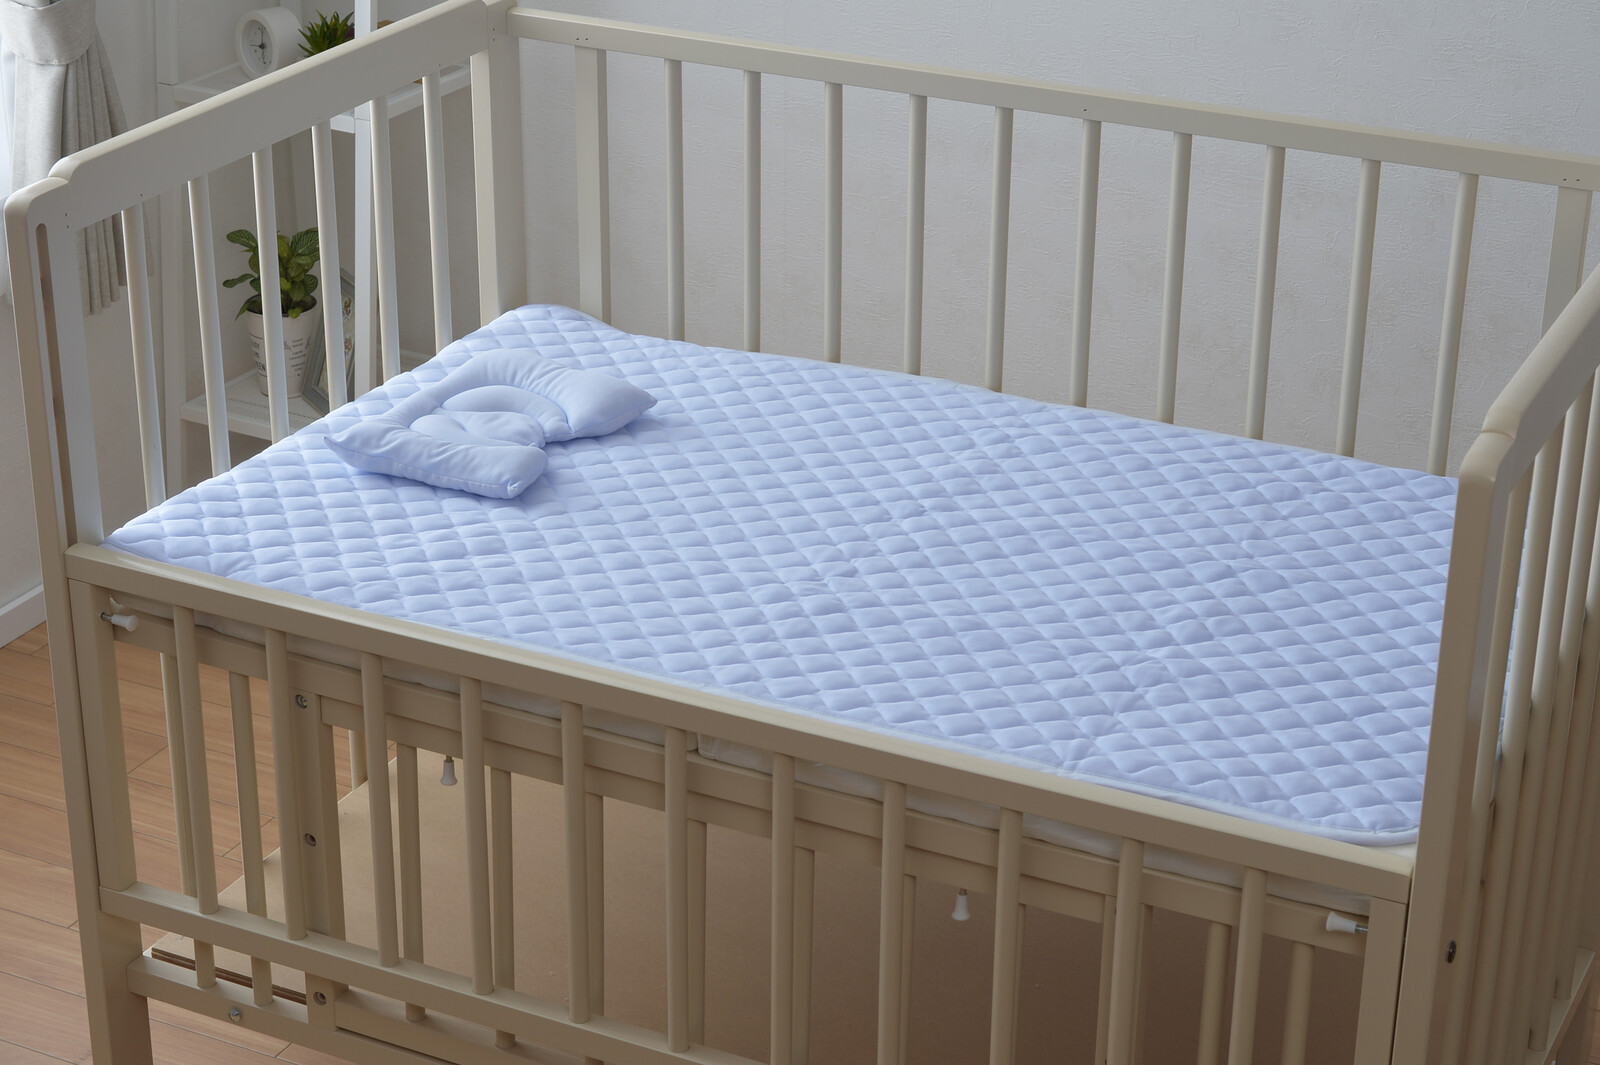 baby mattress bed